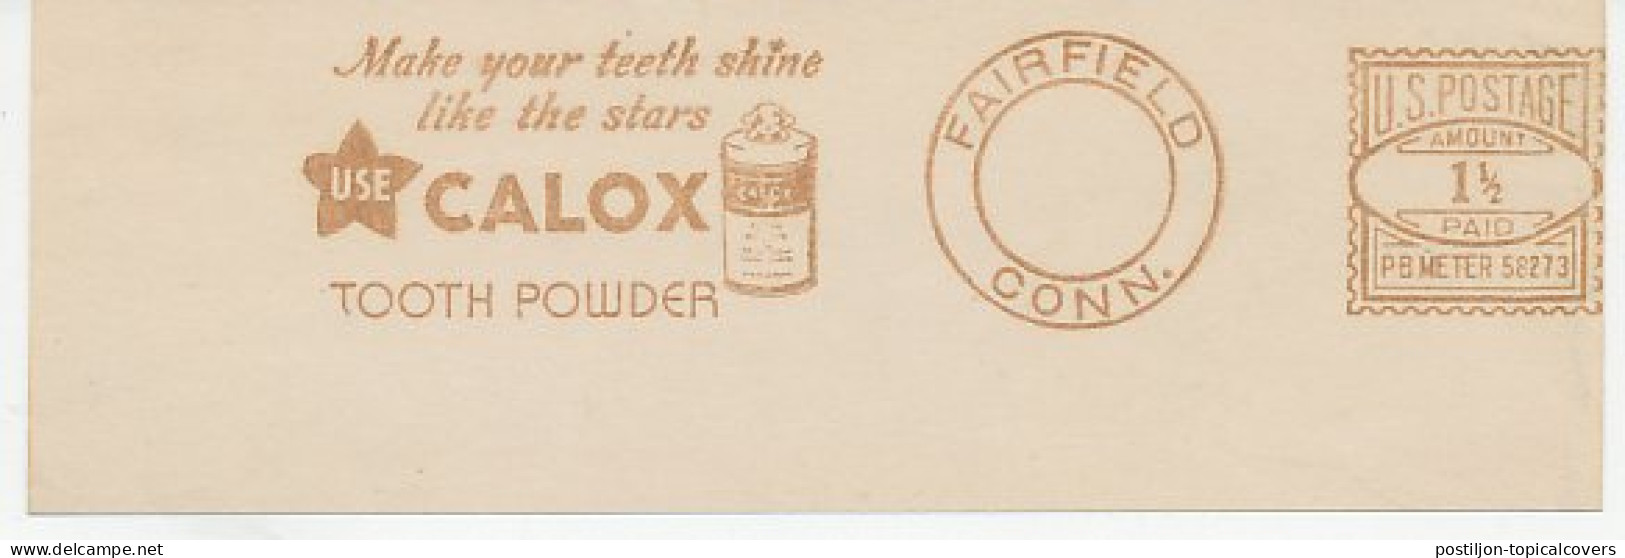 Meter Cut USA Tooth Powder - Calox - Médecine